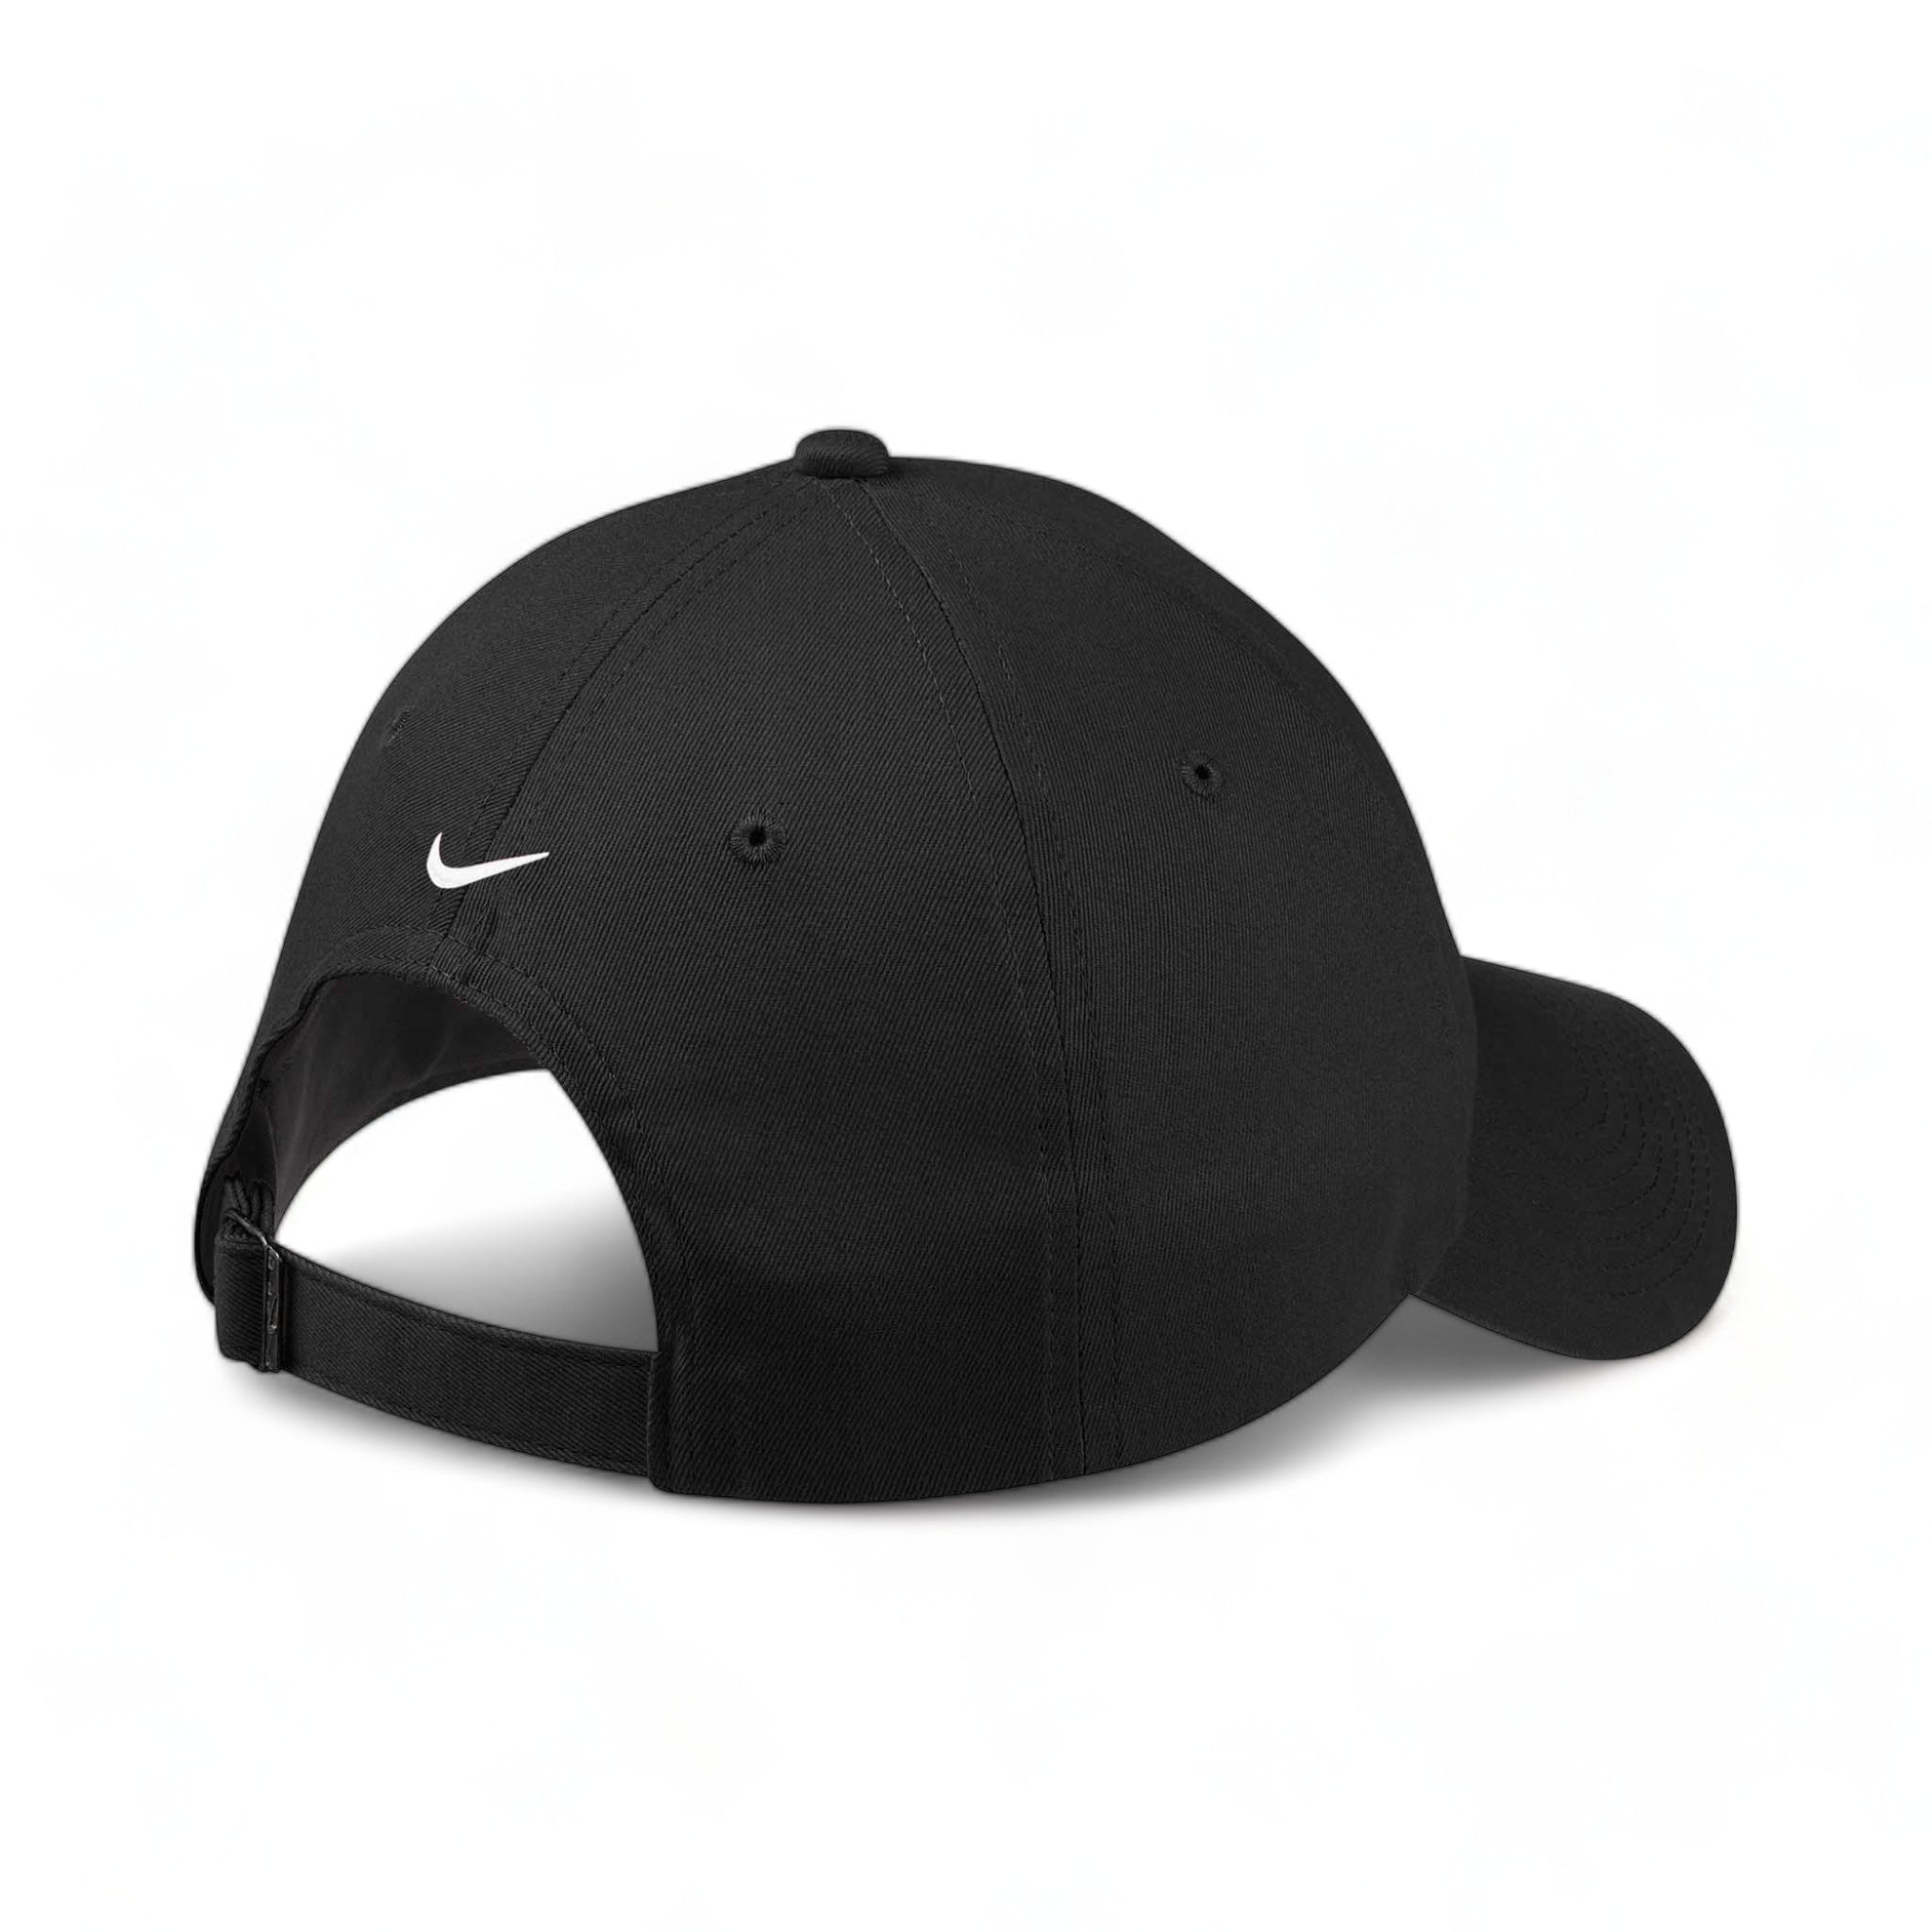 Back view of Nike NKFB6449 custom hat in black